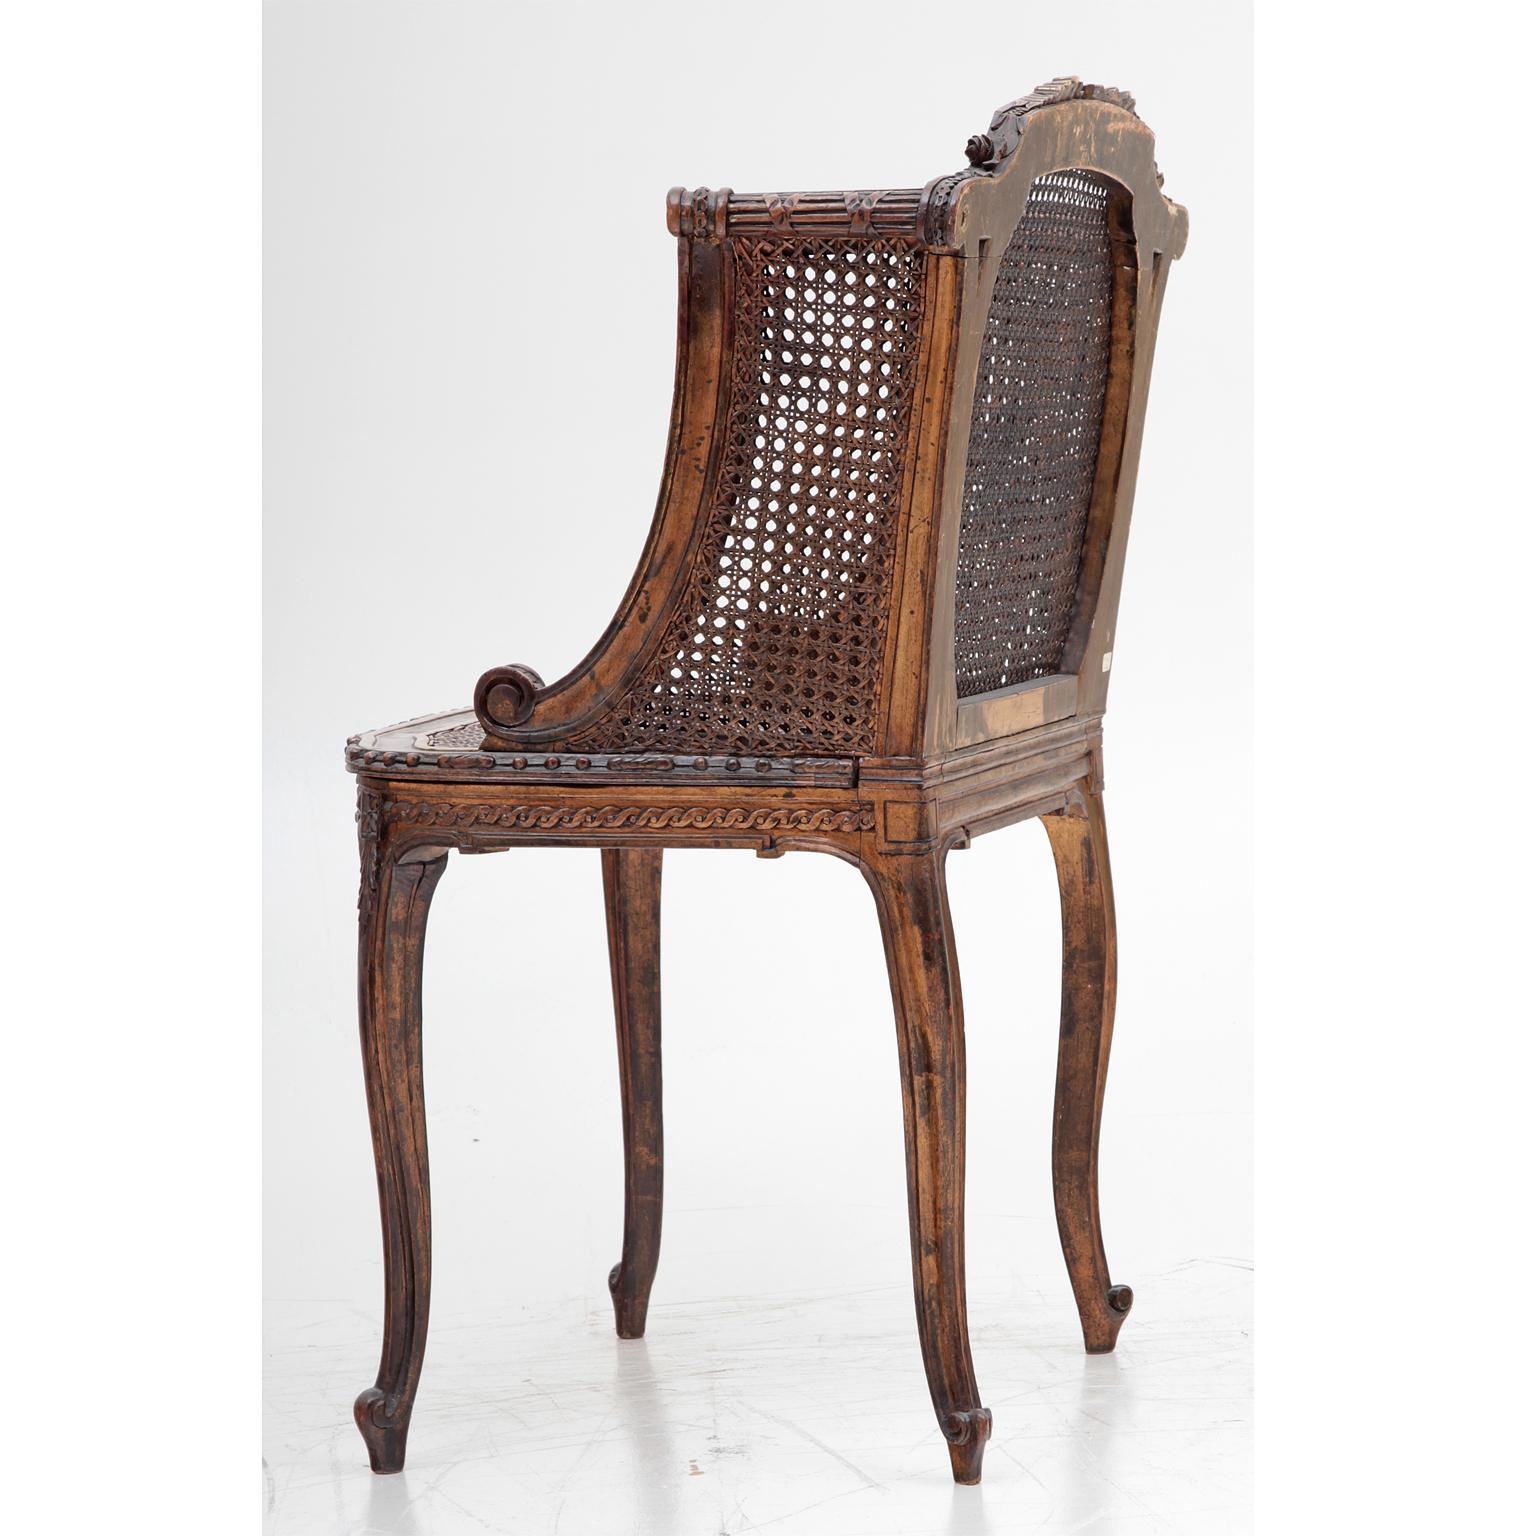 Wicker Revival Armchair, 19th Century